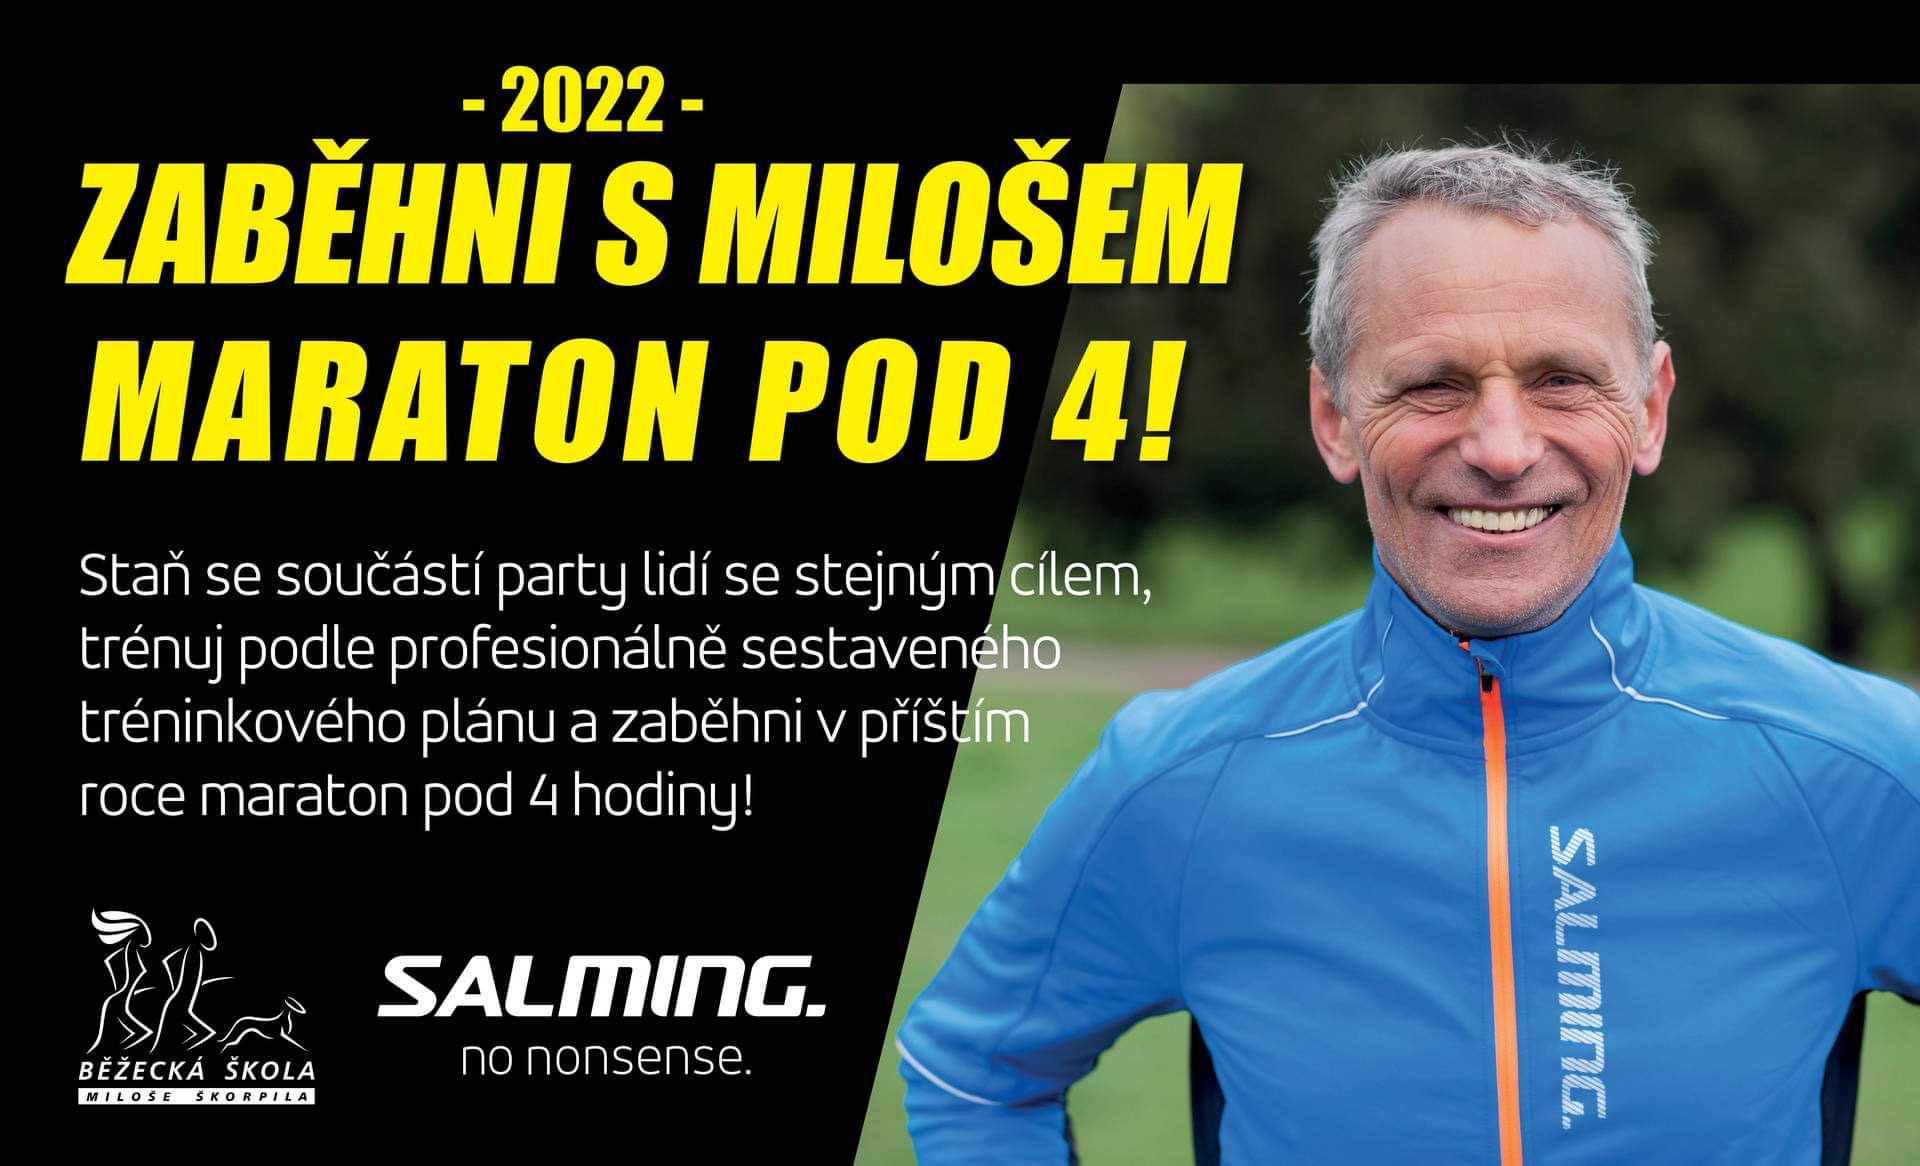 Maraton pod 4 s Milošem a Salmingem již po sedmé